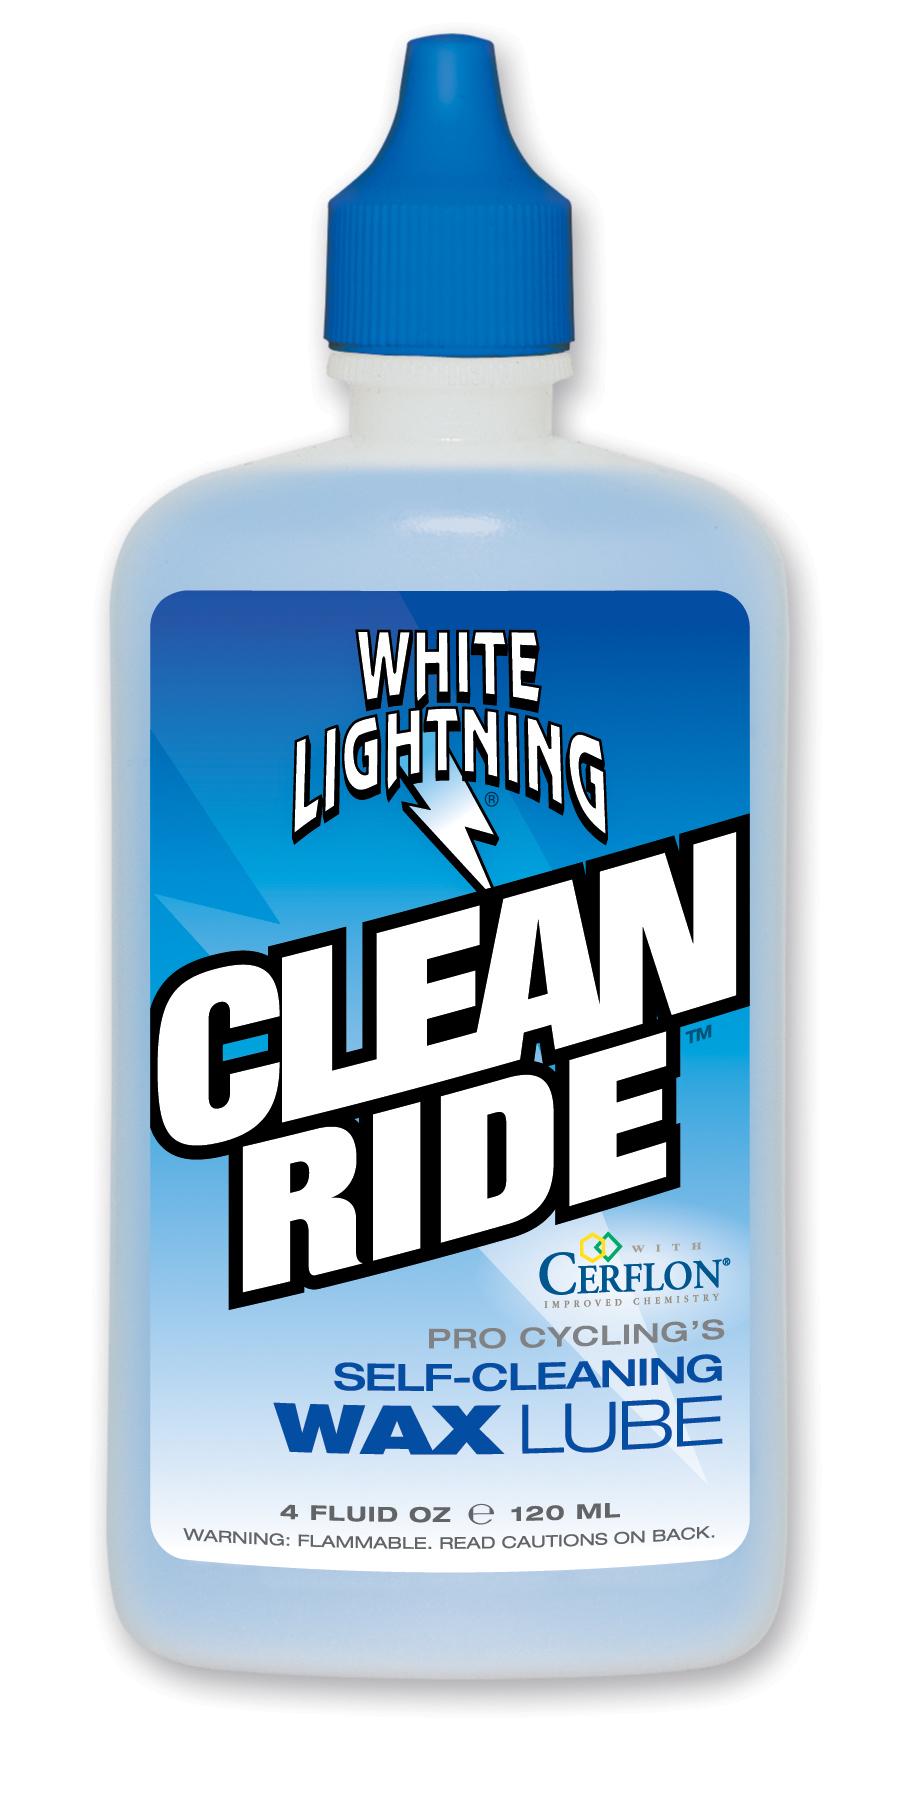 White Lightning Clean Ride - 8 fl oz dropper